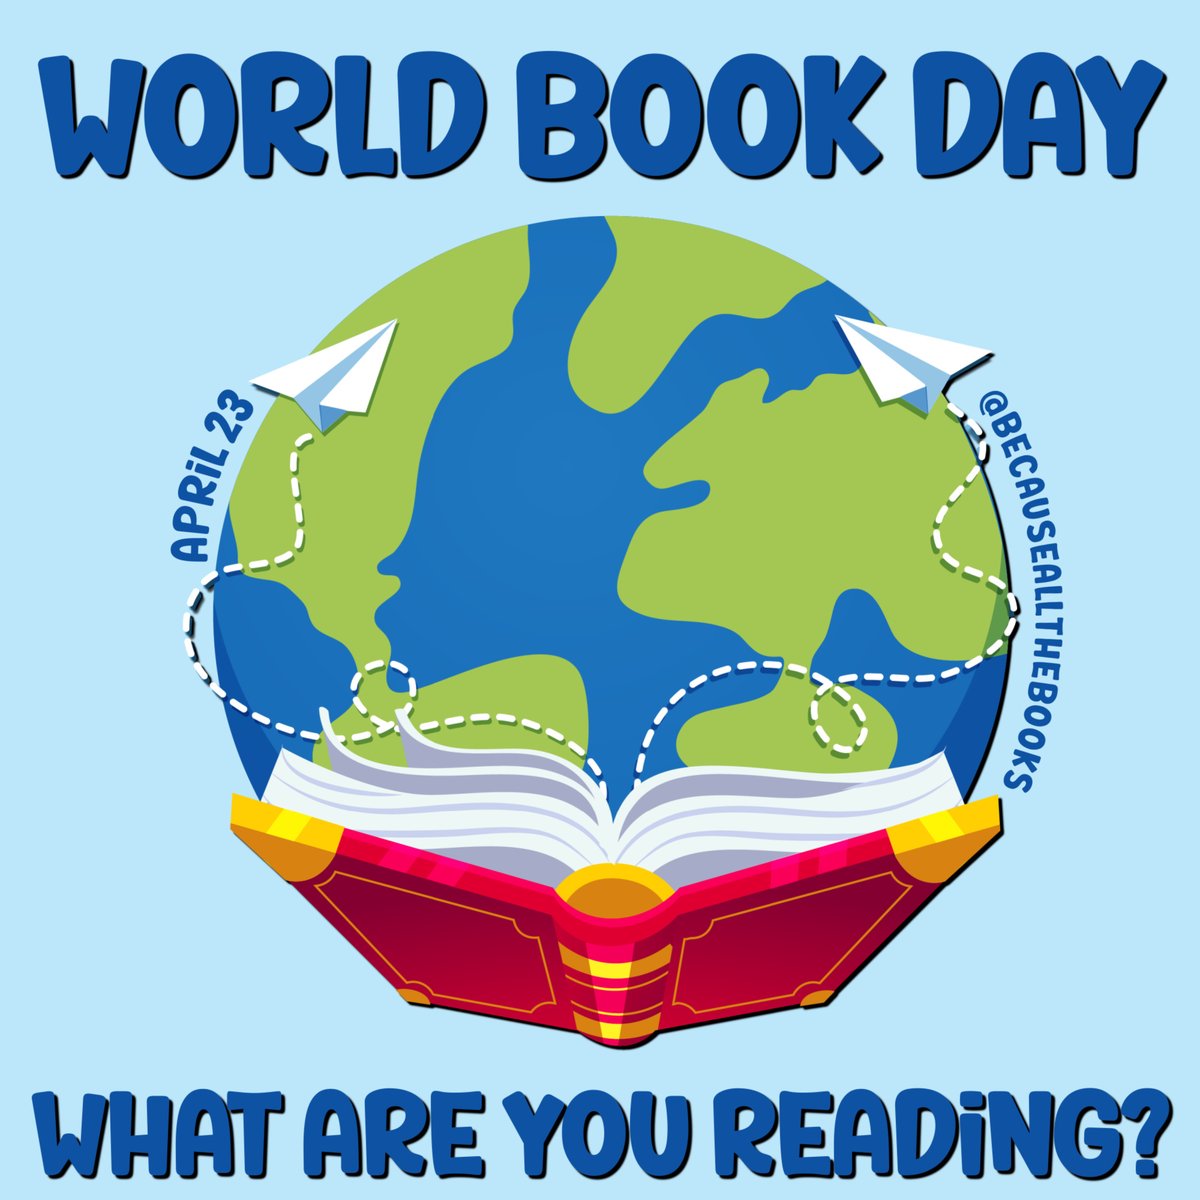 Happy World Book Day! 

#BecauseAllTheBooks #WorldBookDay #WhatAreYouReading #BooksForLife